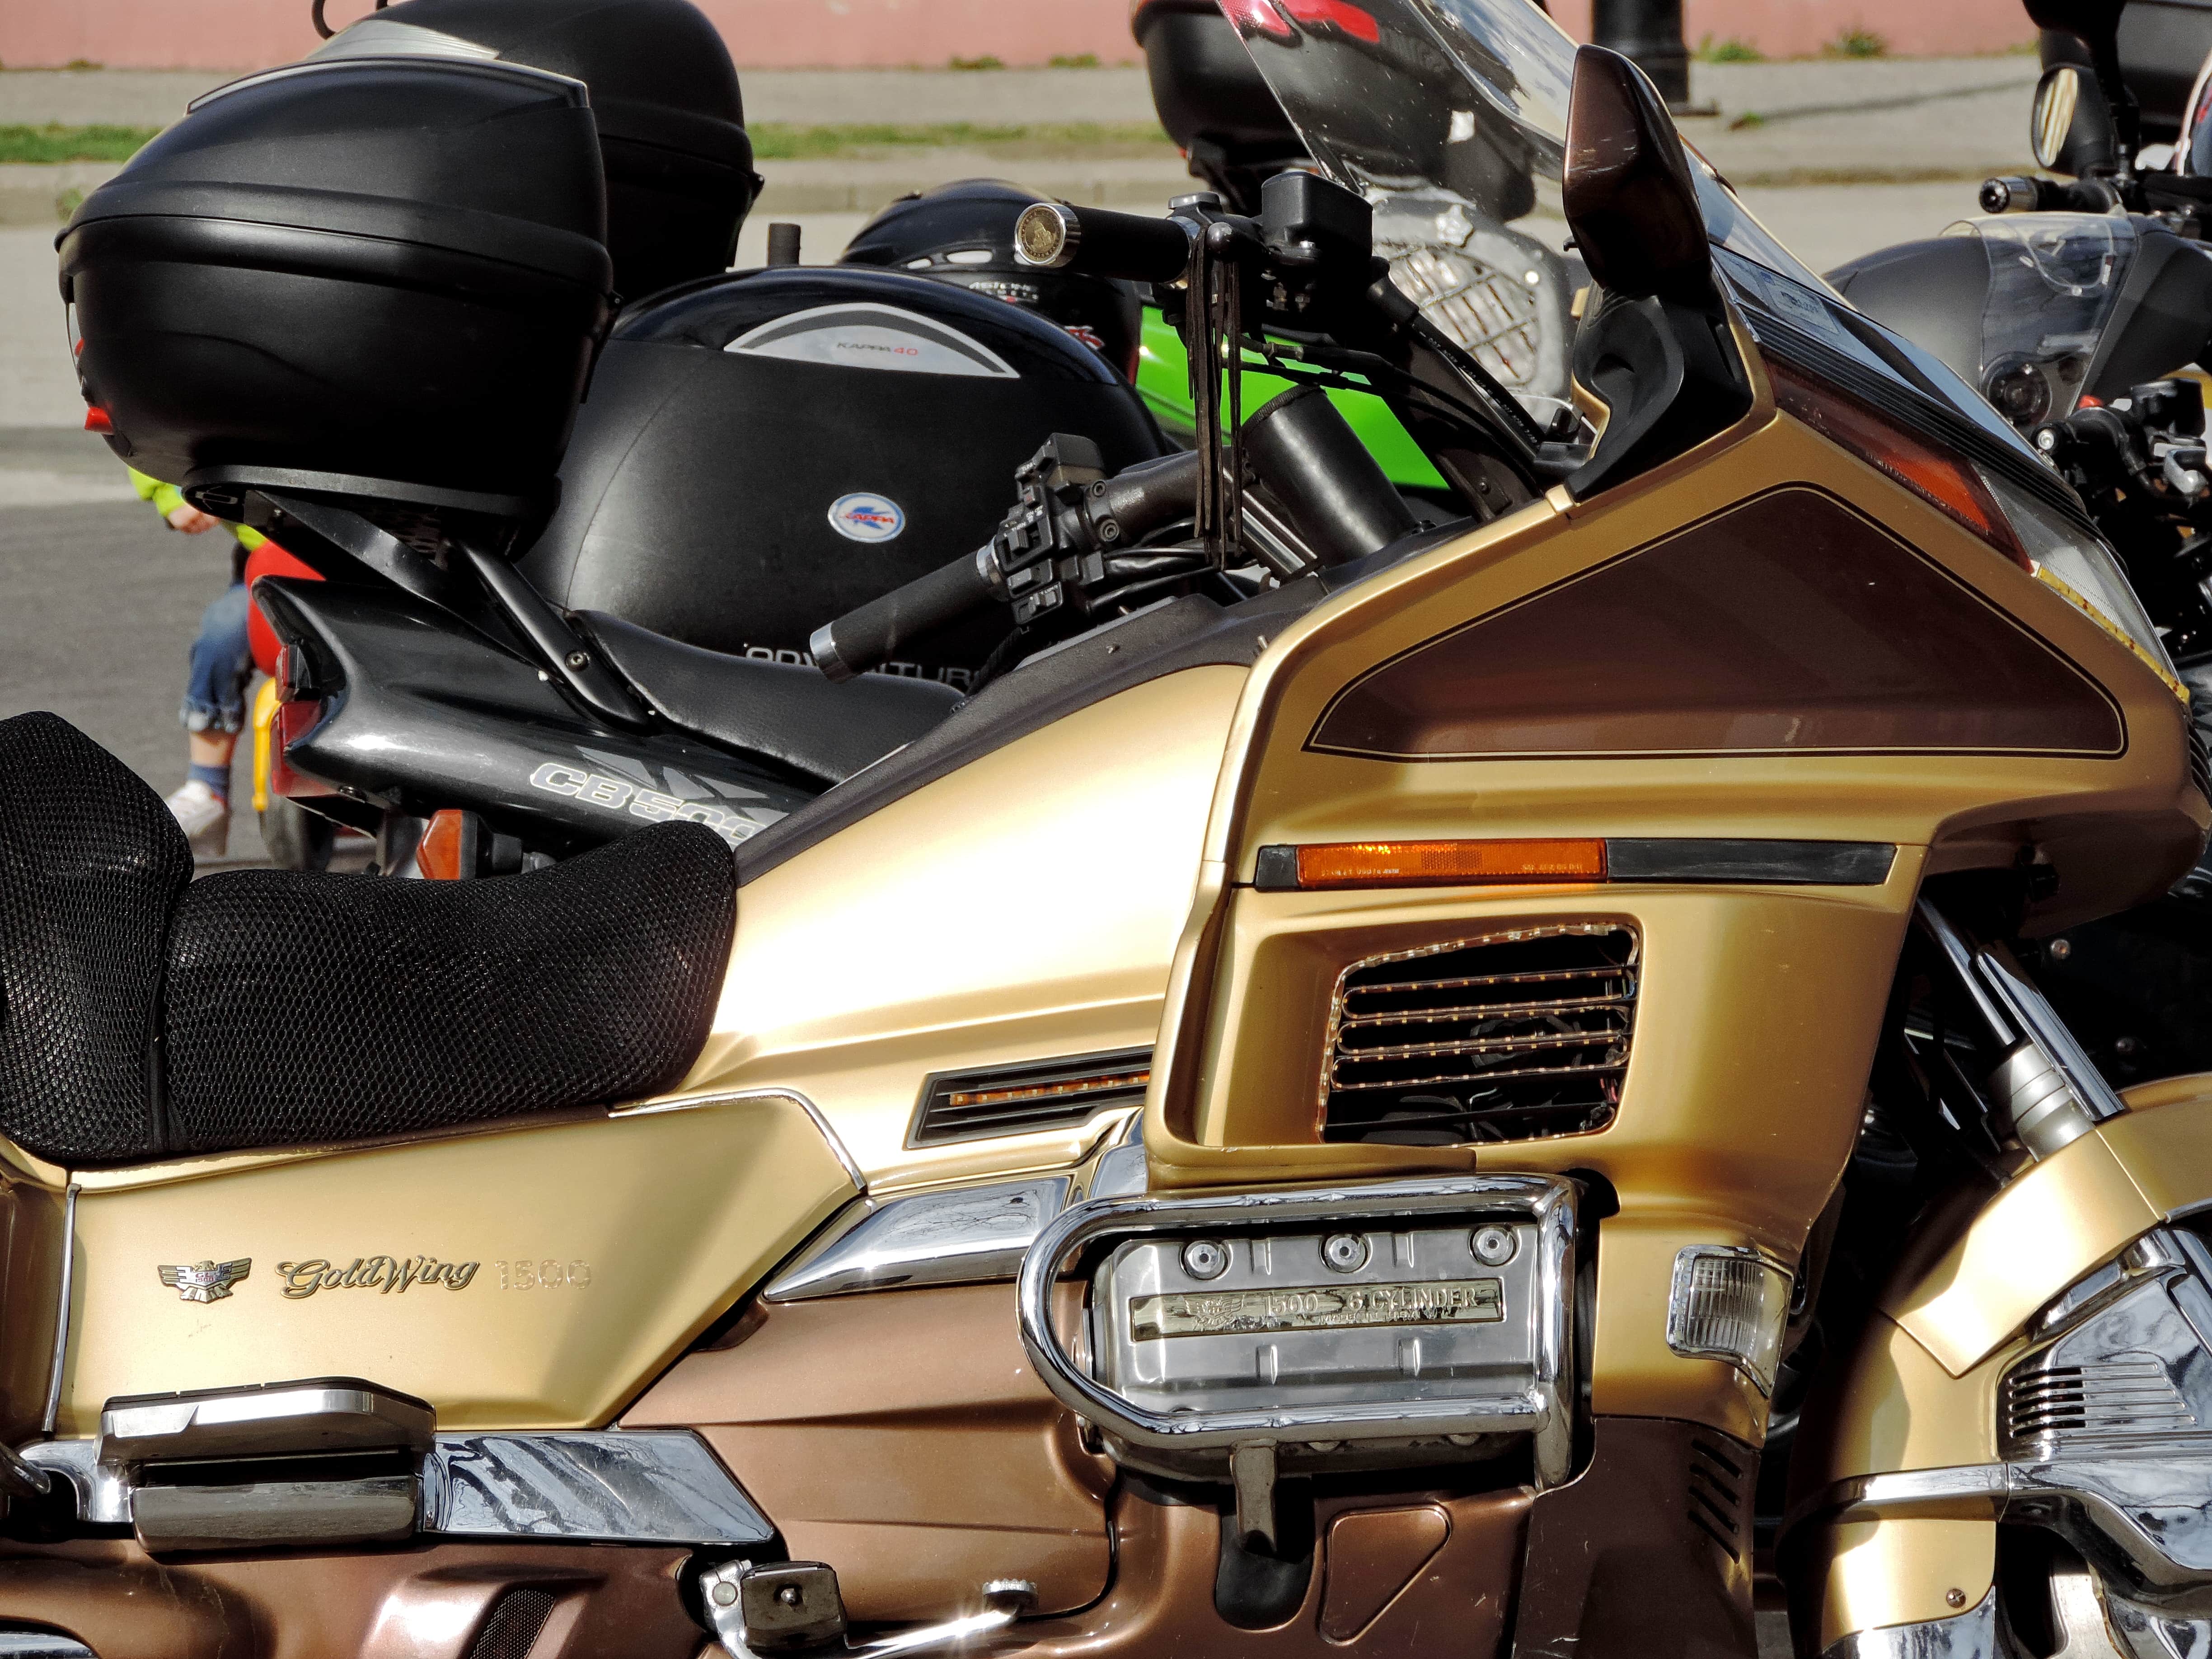 Luxury Motorcycle Brands: Top Picks for Off-Road Adventures